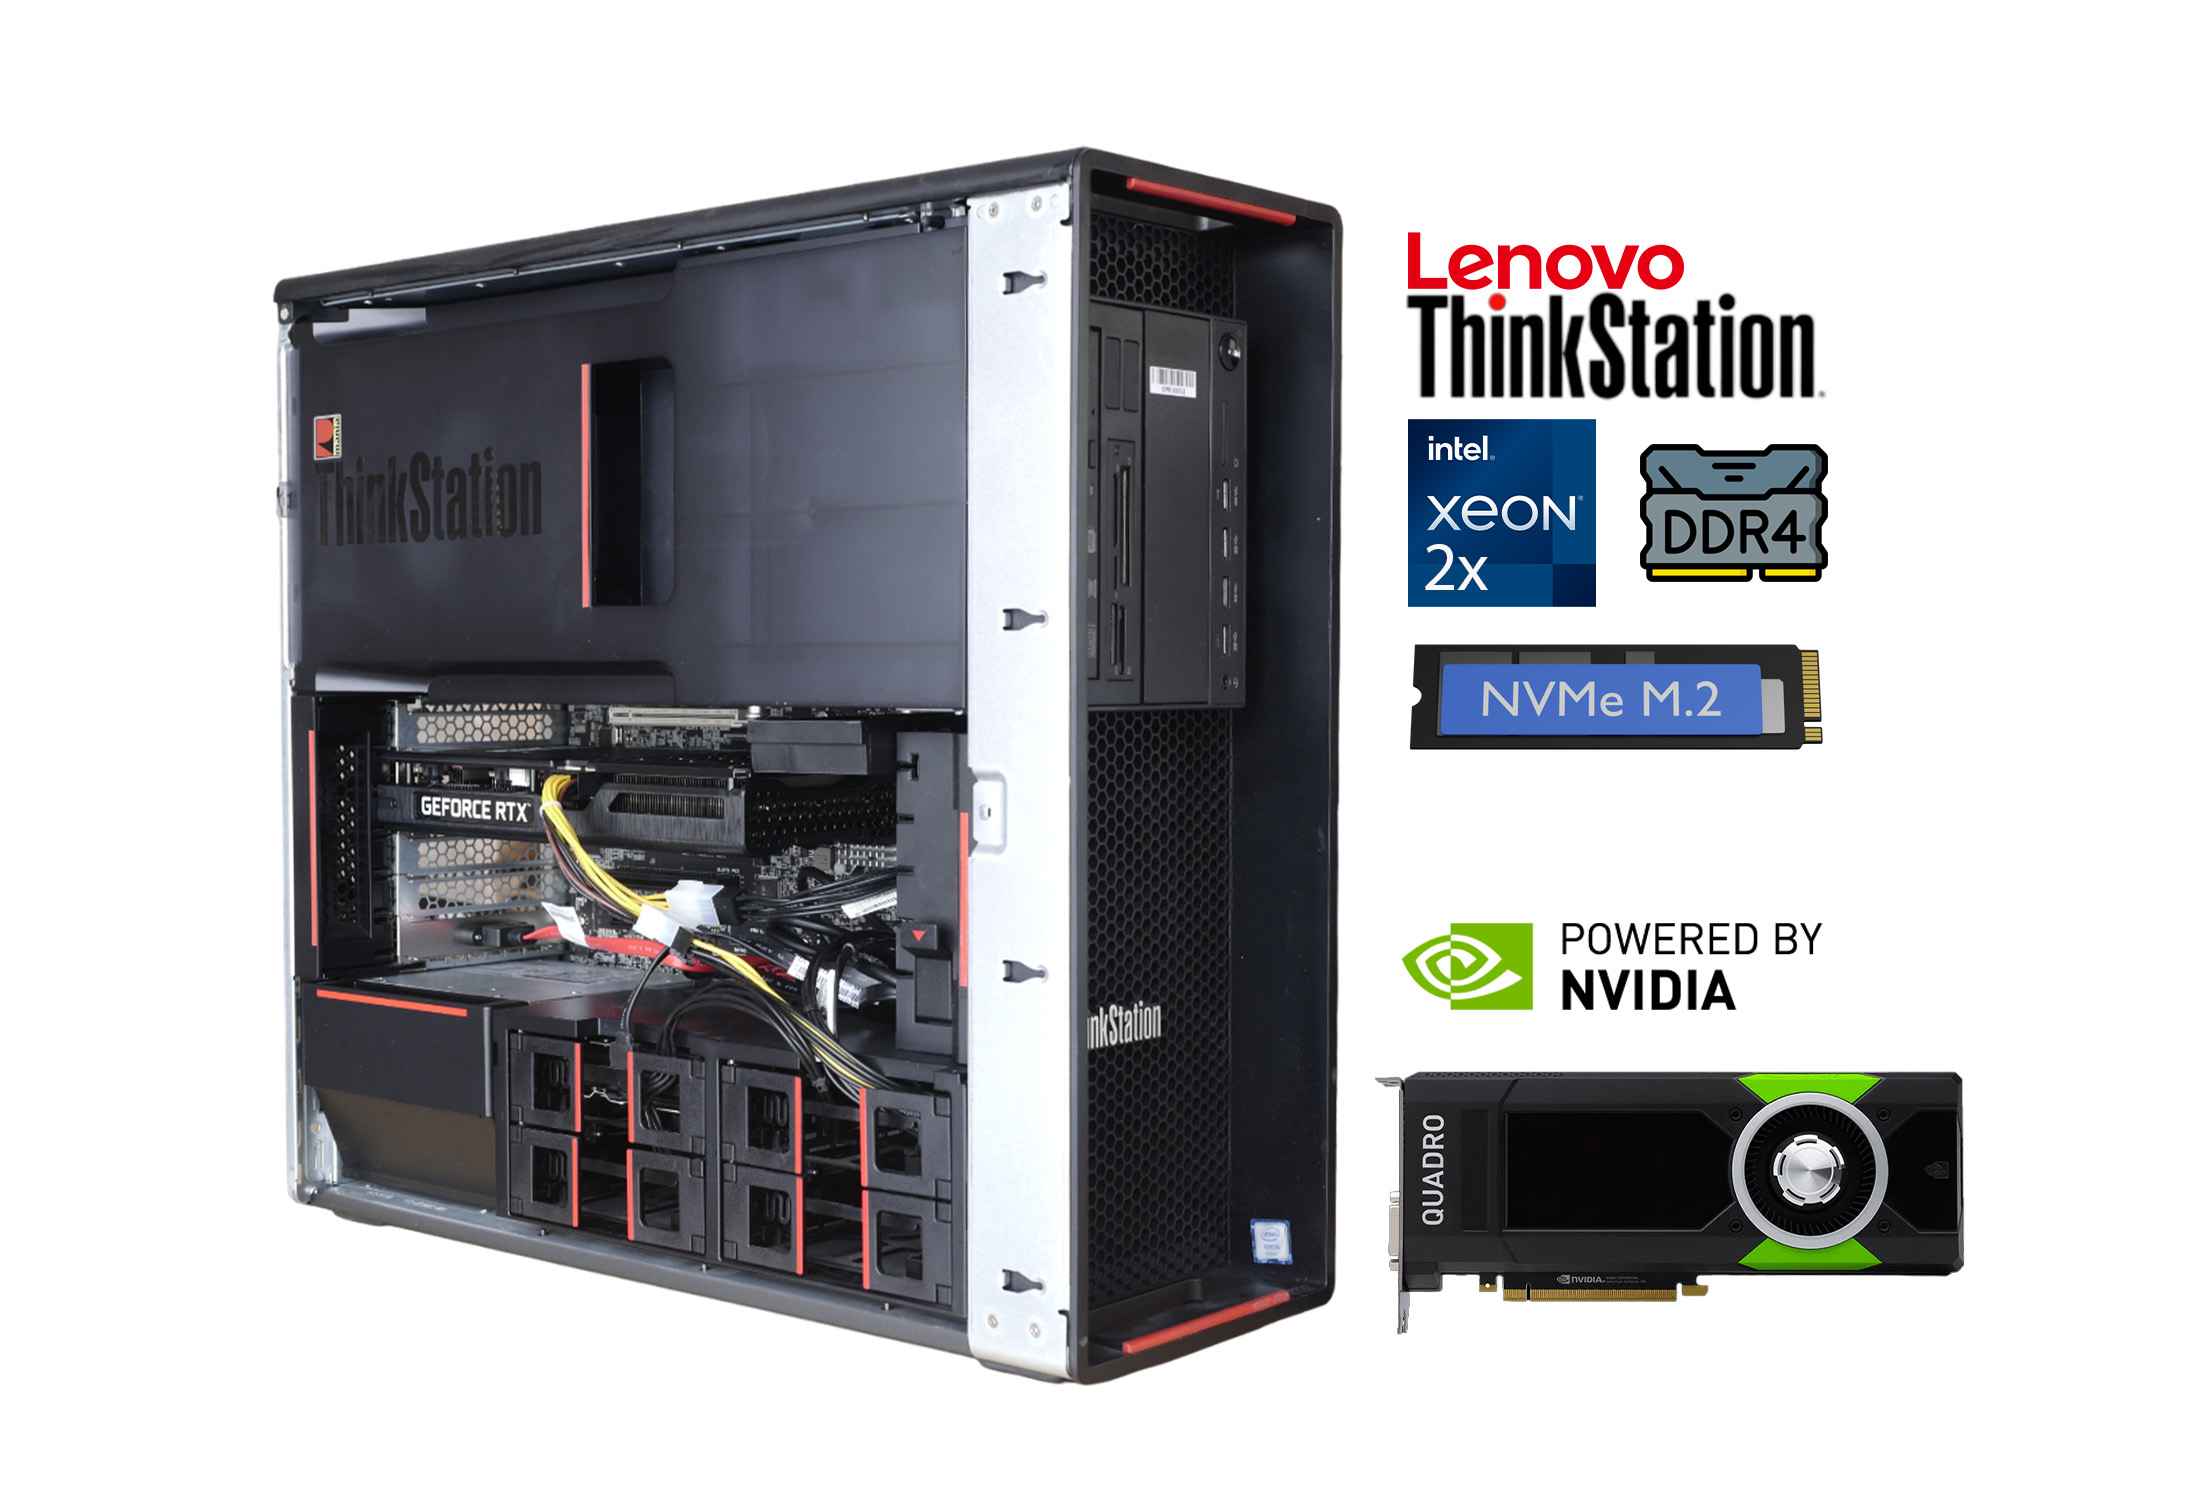 Lenovo Thinkstation P700 2x Xeon E5-2687W v3 DDR4 NVMe Quadro M4000-k4odj.jpeg